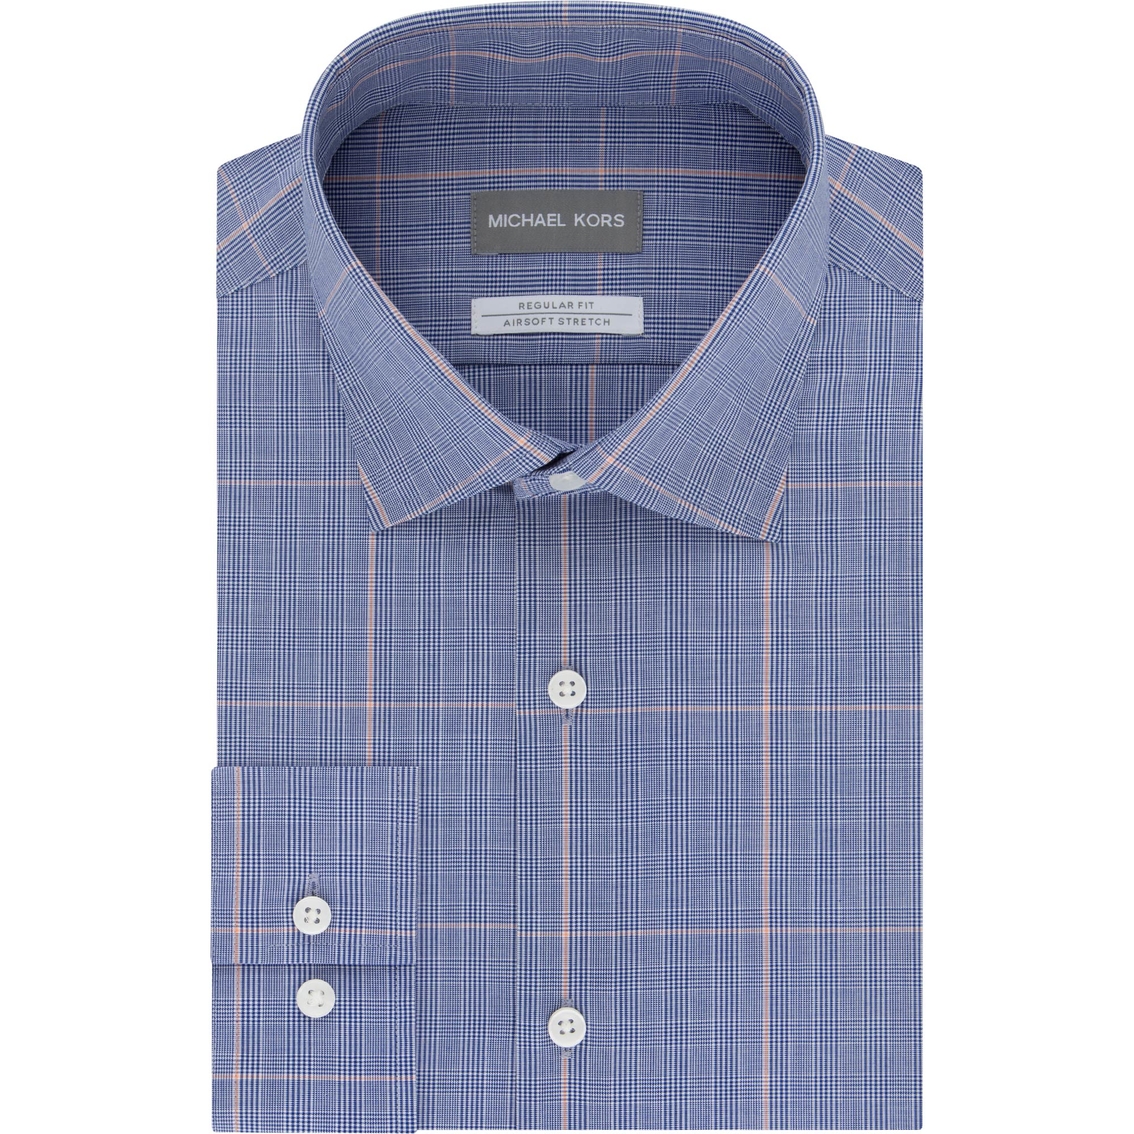 Michael Kors Slim Fit Dress Shirt | Shirts | Clothing & Accessories ...